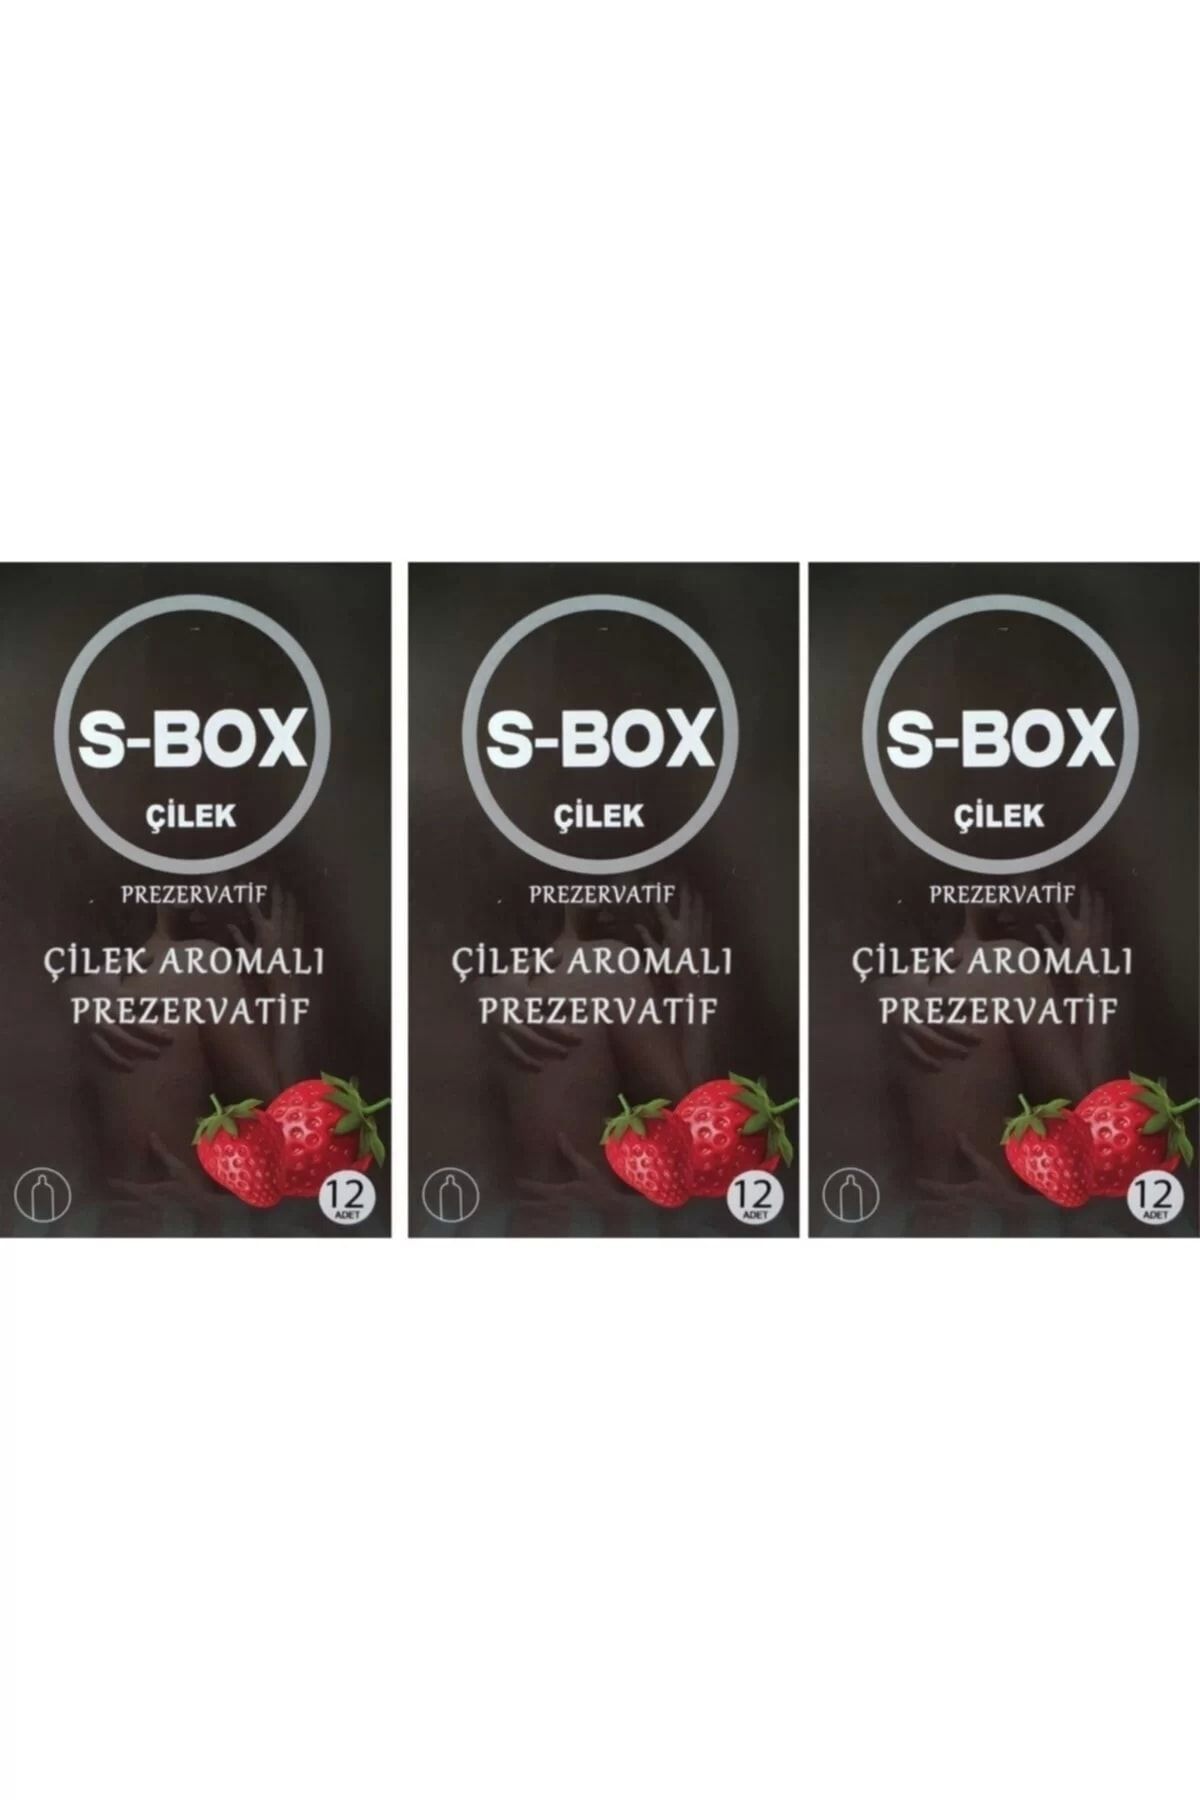 S-Box Sbox Çilekli Prezervatif 12 Li X3 Paket